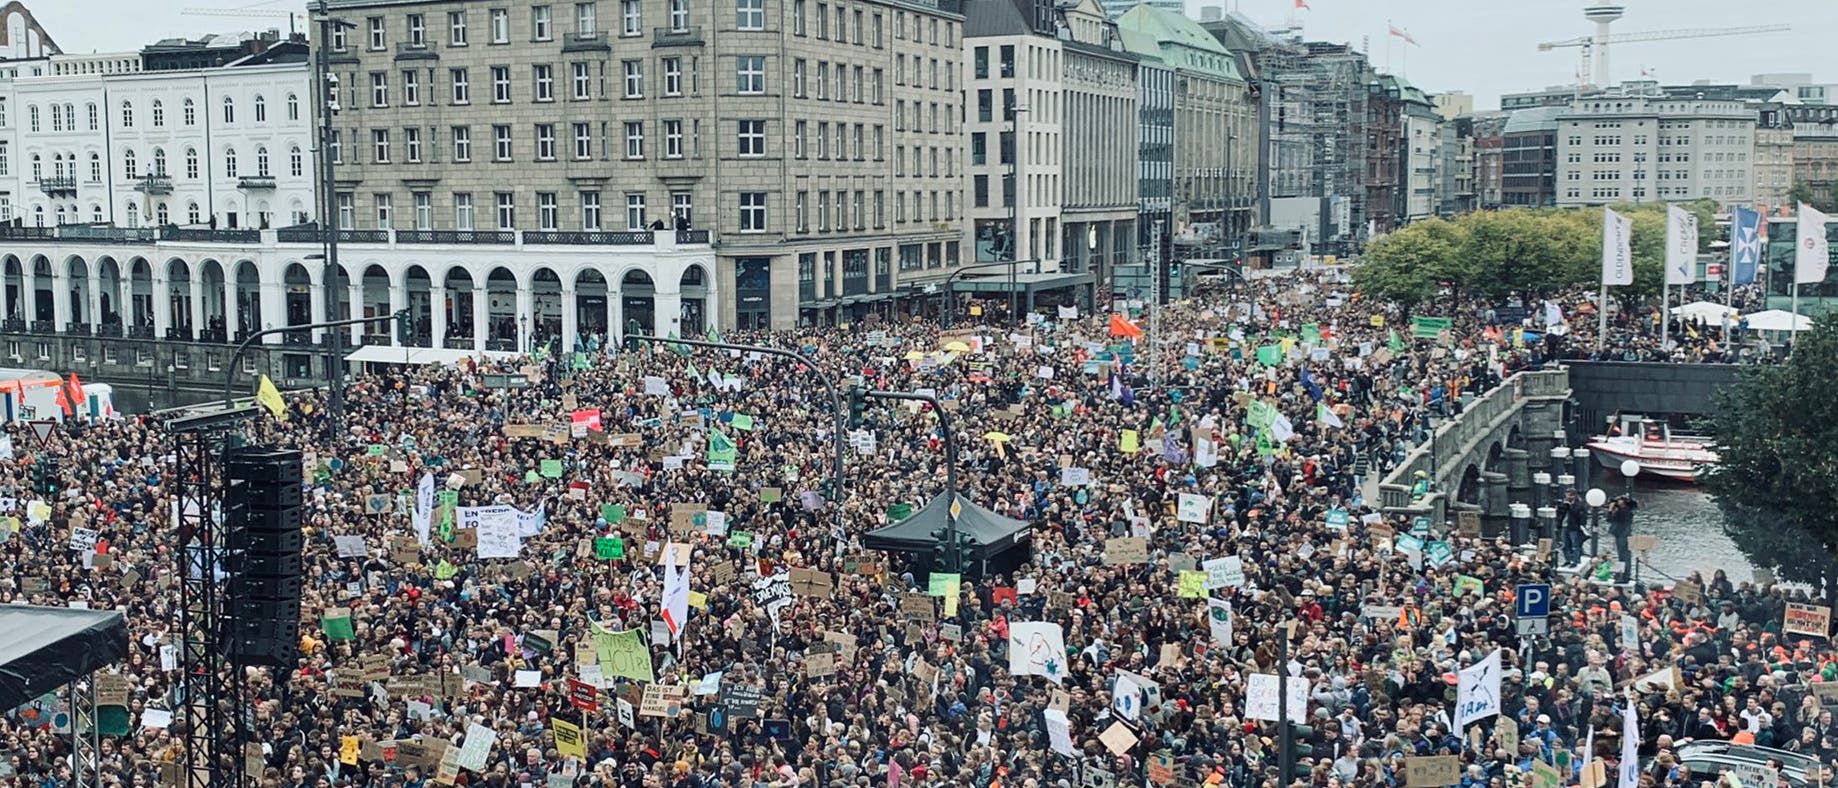 Klimastreik-Demonstration in Hamburg am 20. September 2019